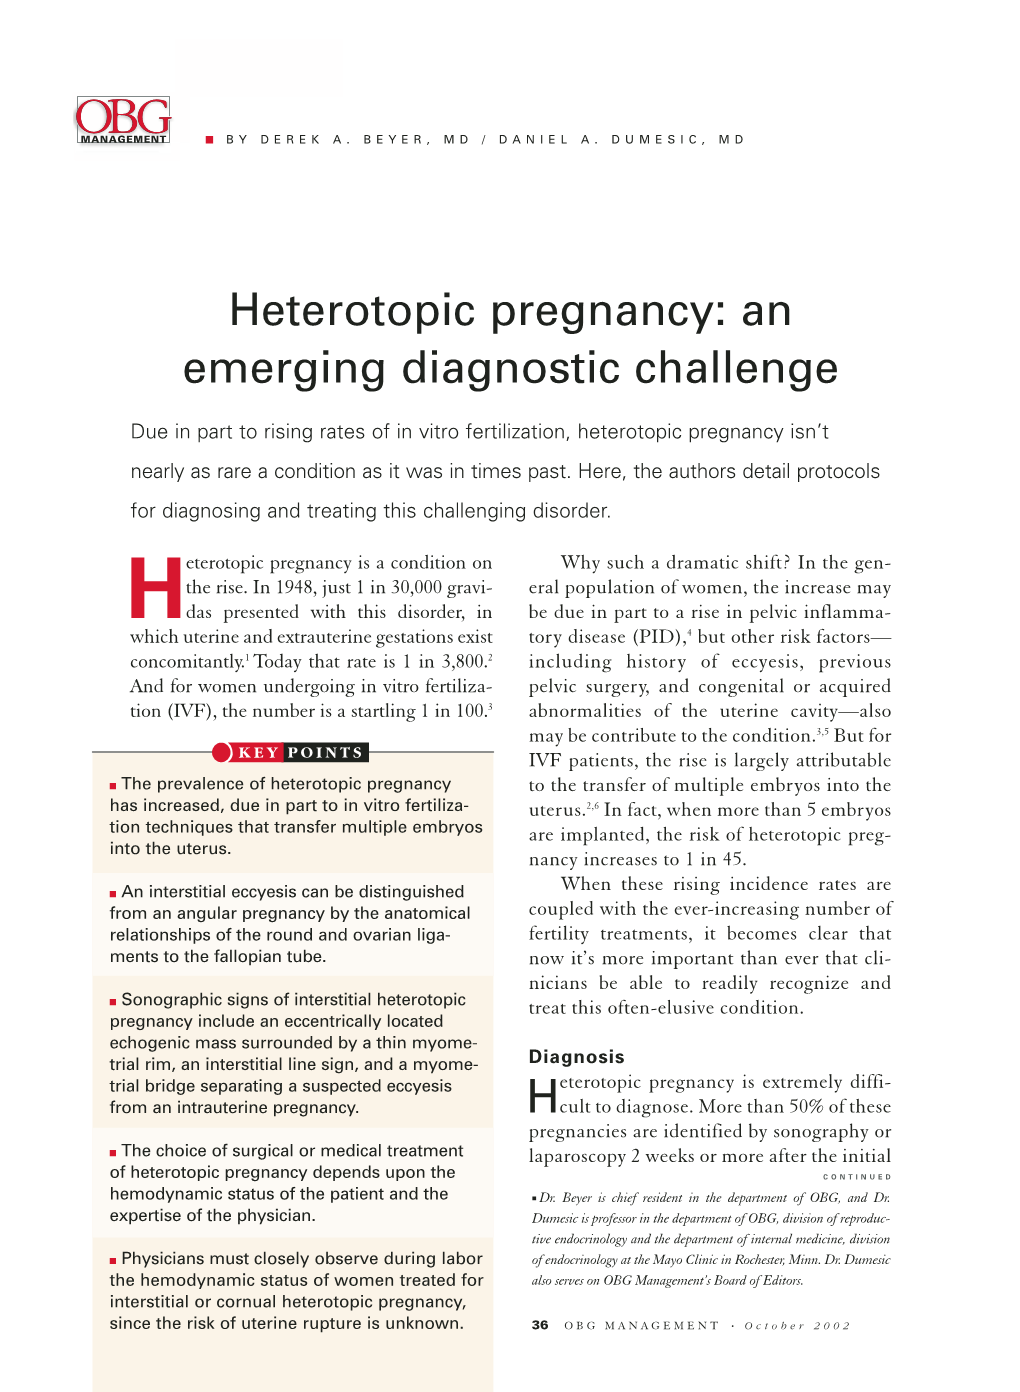 Heterotopic Pregnancy: an Emerging Diagnostic Challenge